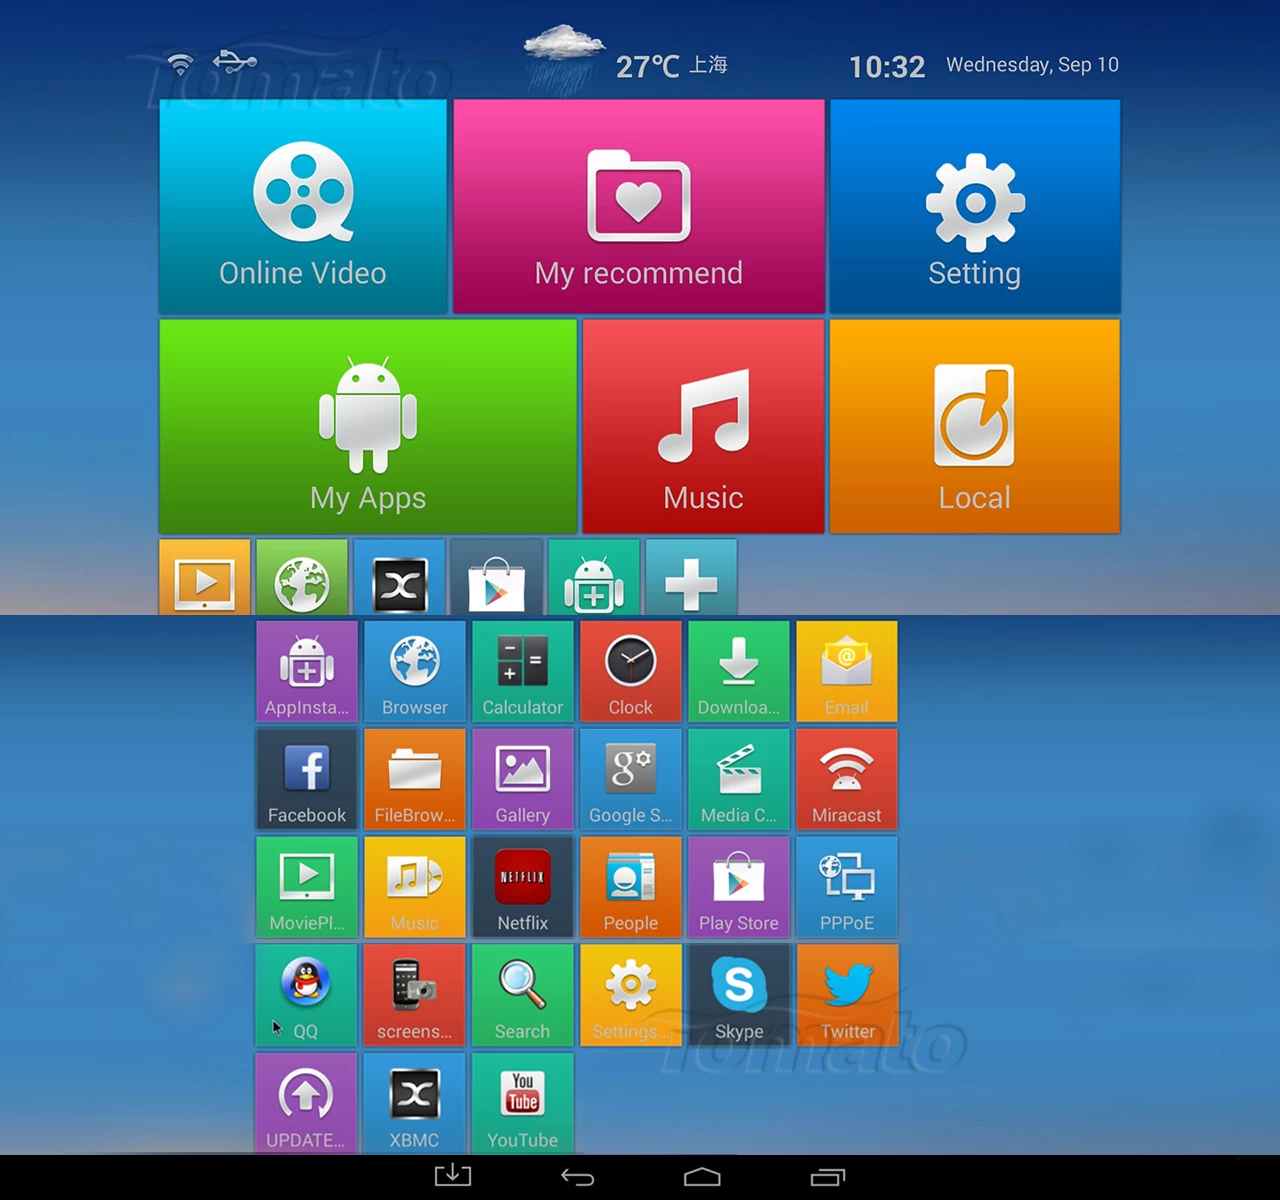 Android TV Box Aluminum Alloy Casing XBMC H.265 decoding MXQ2 Android 4.4 tv box MXQ2